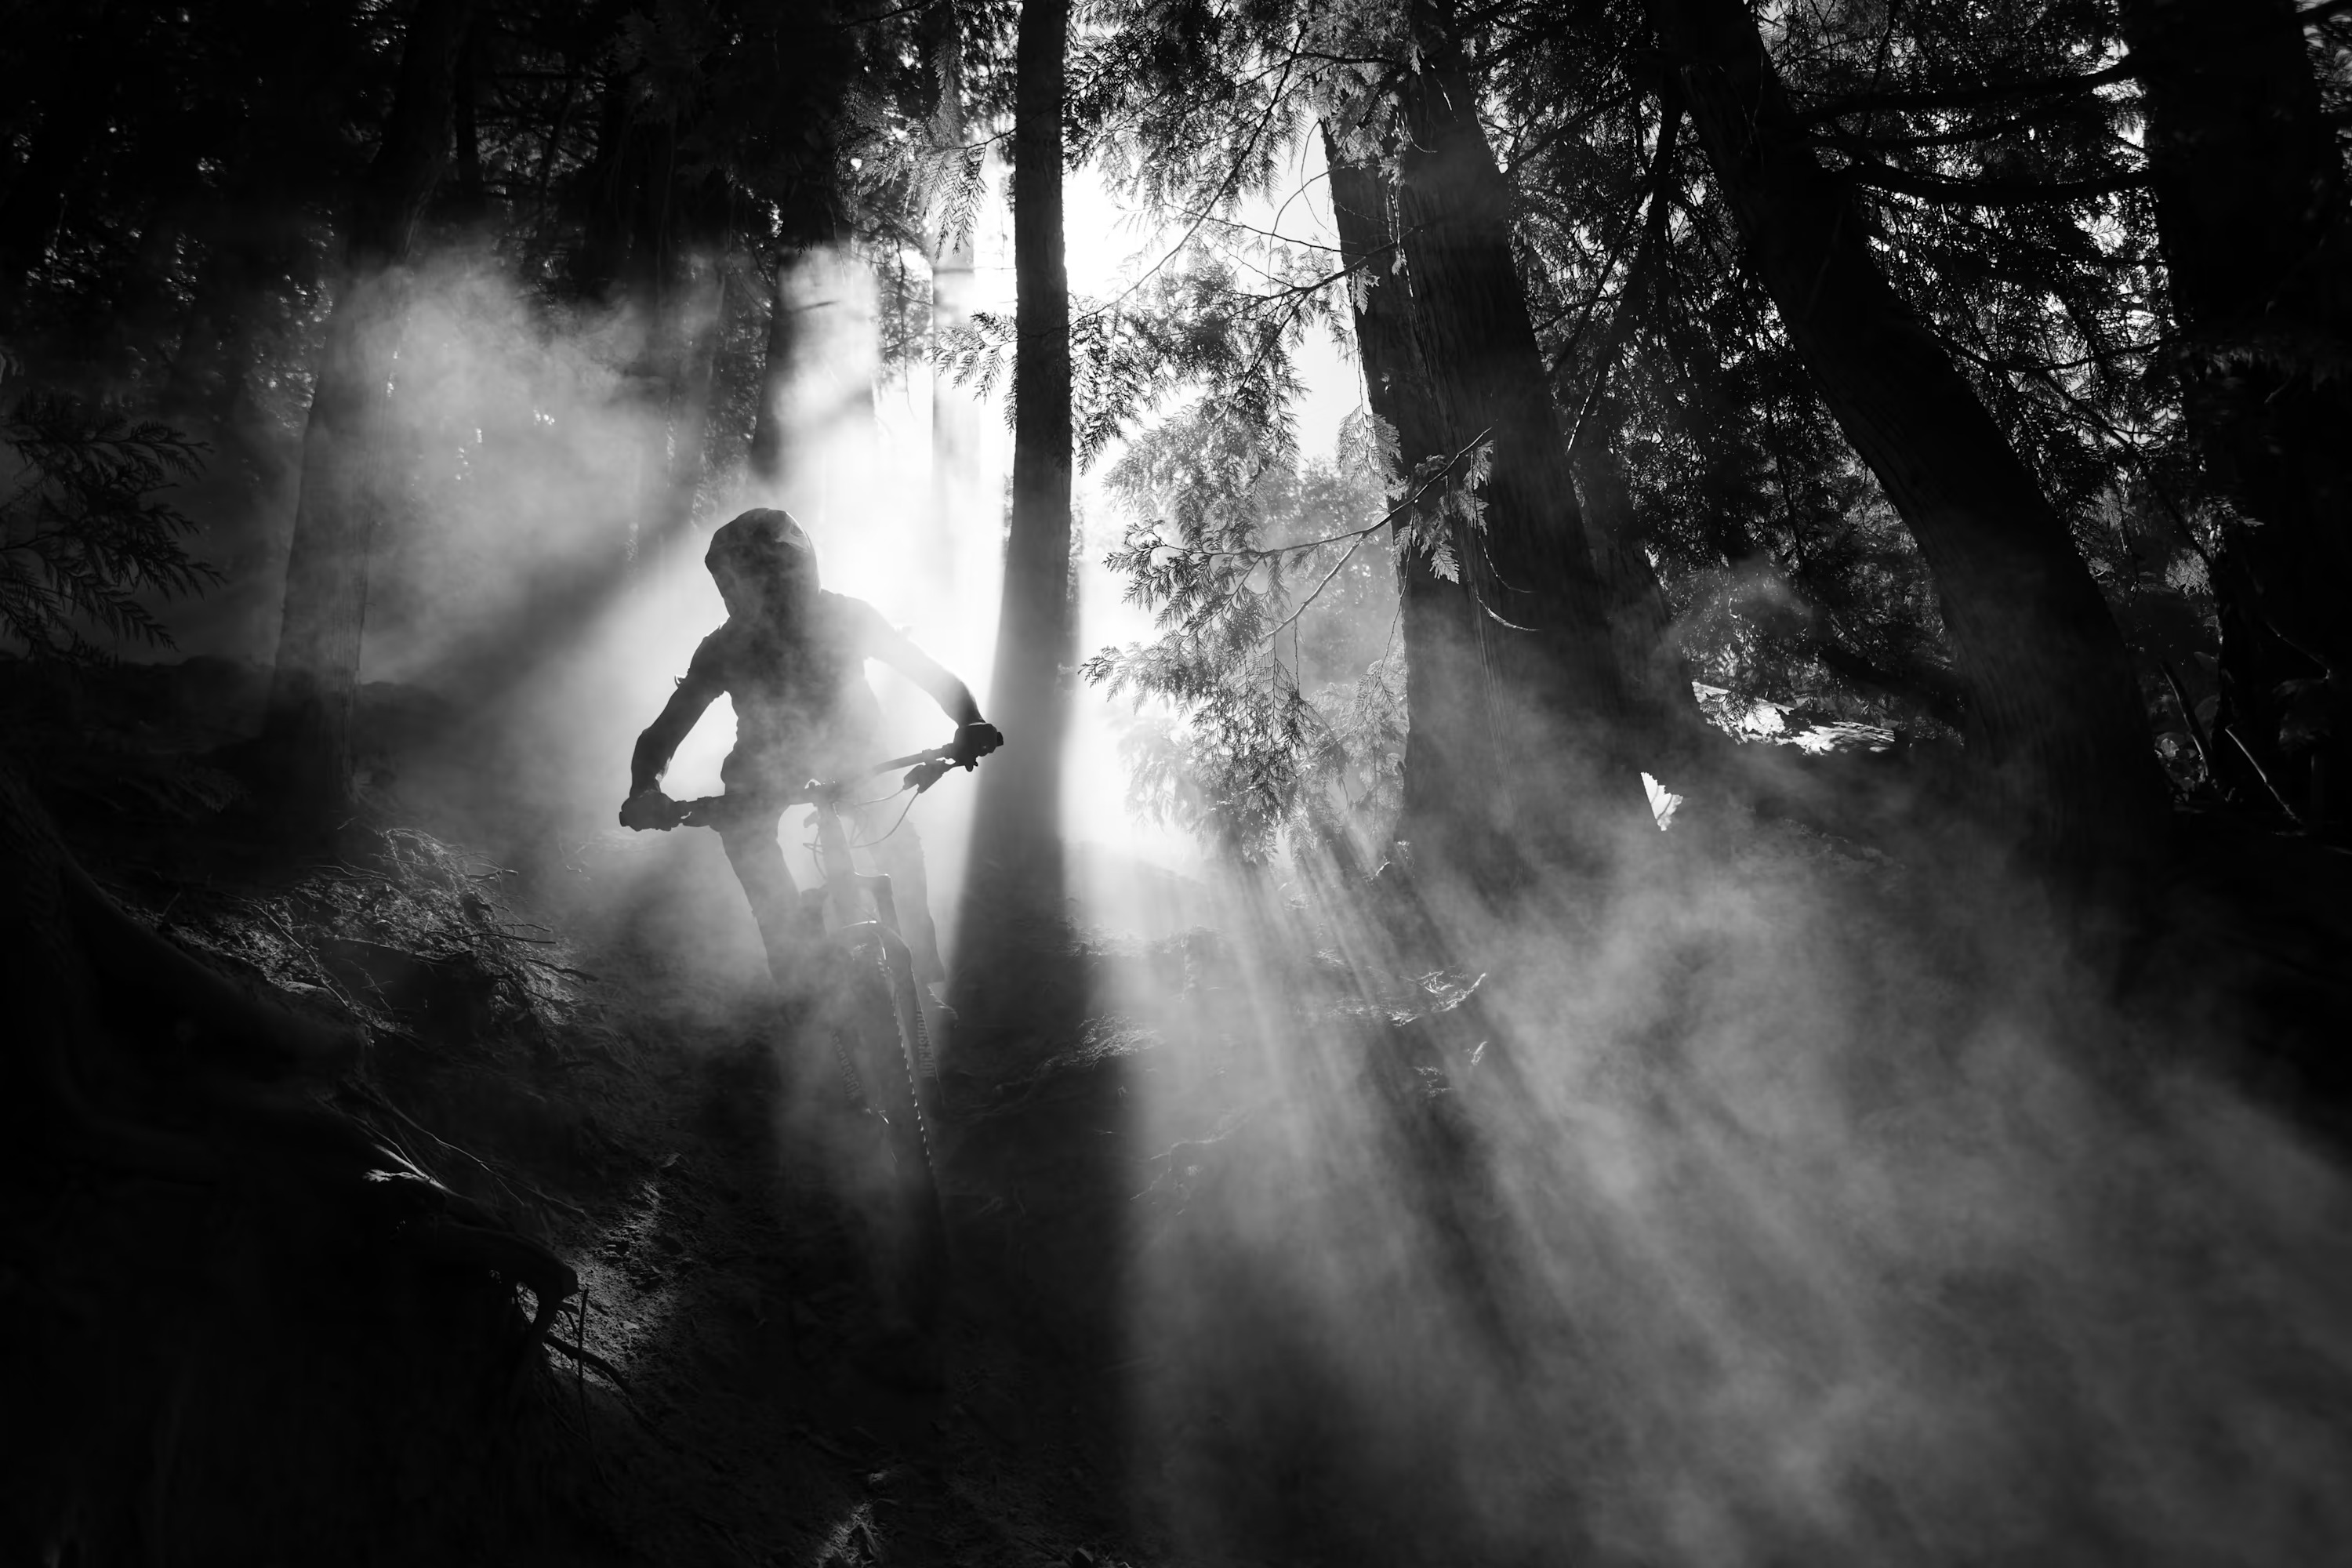 Red Bull Illume 2021. Категория "RAW" - Канадец Бруно Лонг (Bruno Long) за фото байкера,  спускающегося по грунтовой лесной тропе"